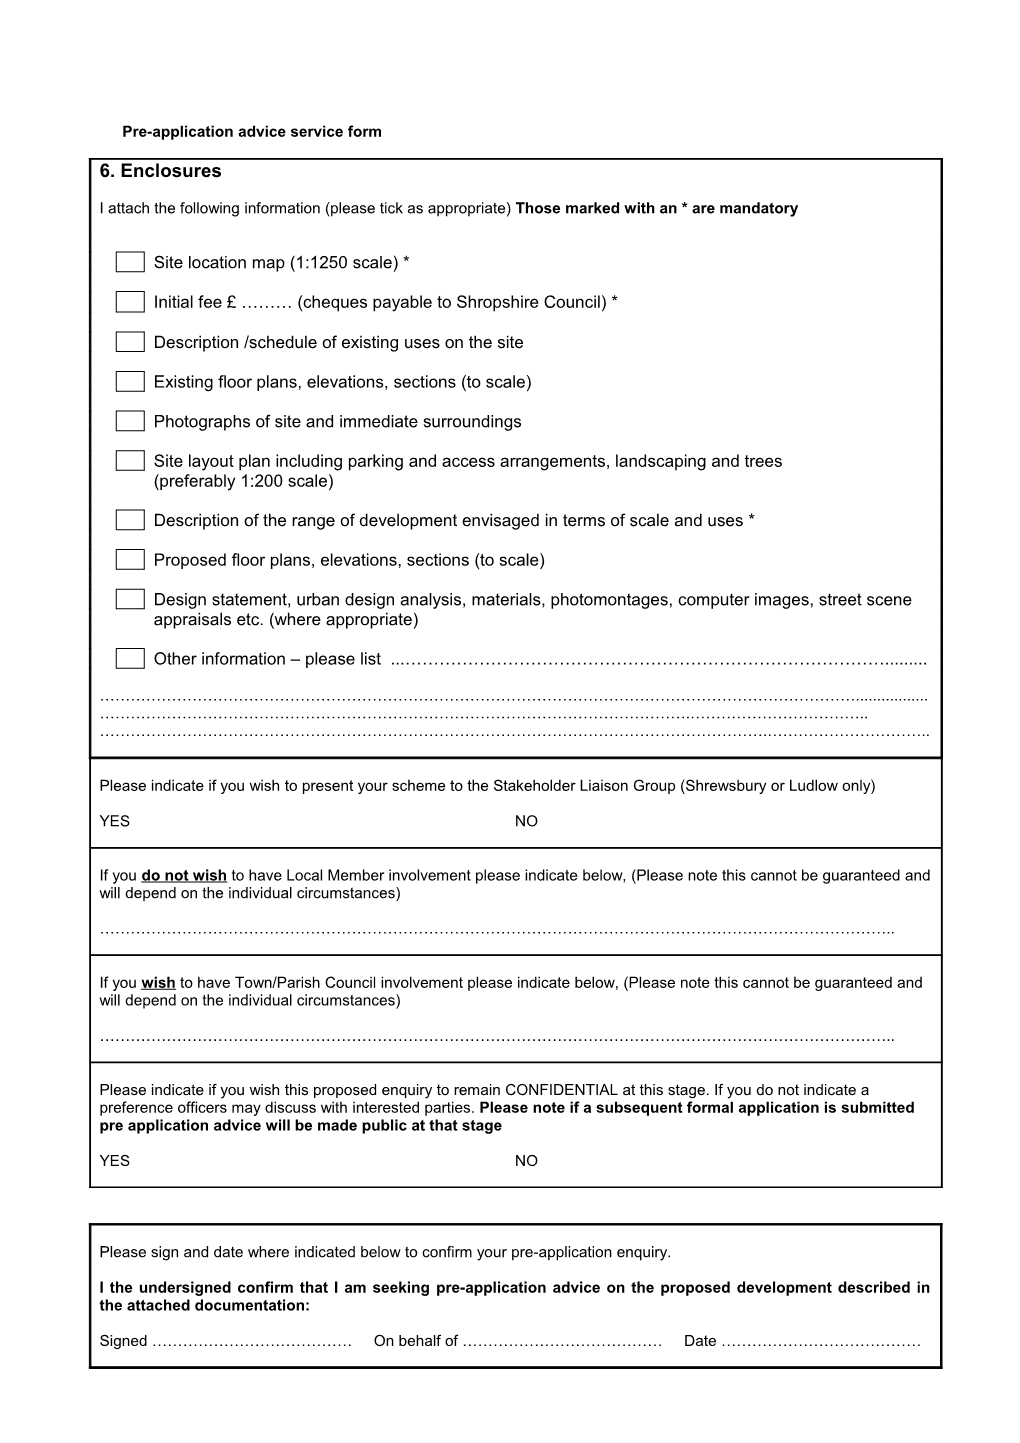 Pre-Application Advice Service Form (Non-Householder)